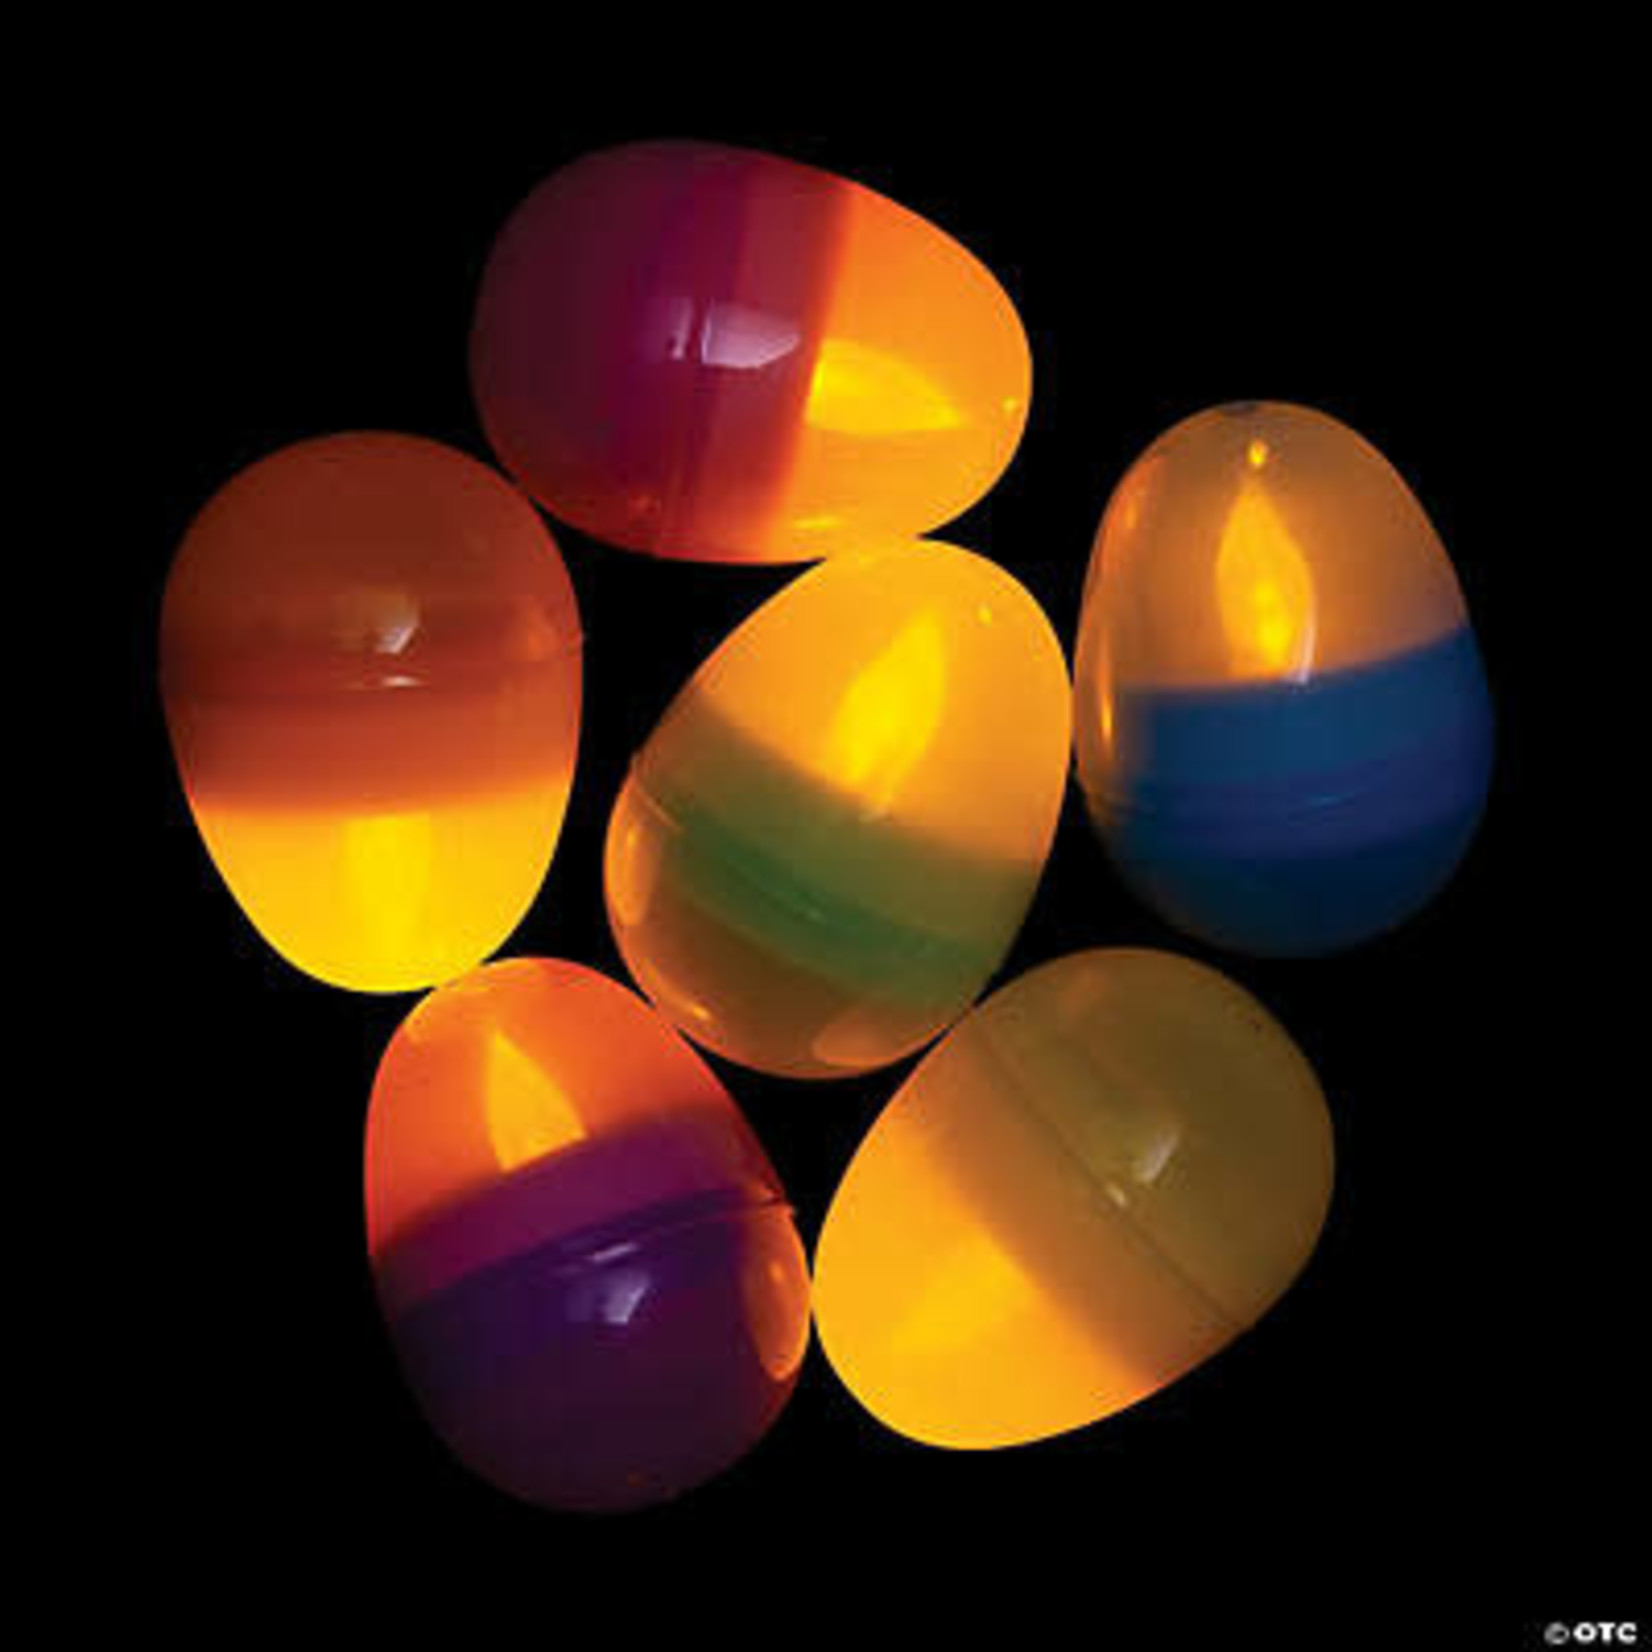 Fun Express Light Up Easter Eggs - 12ct.